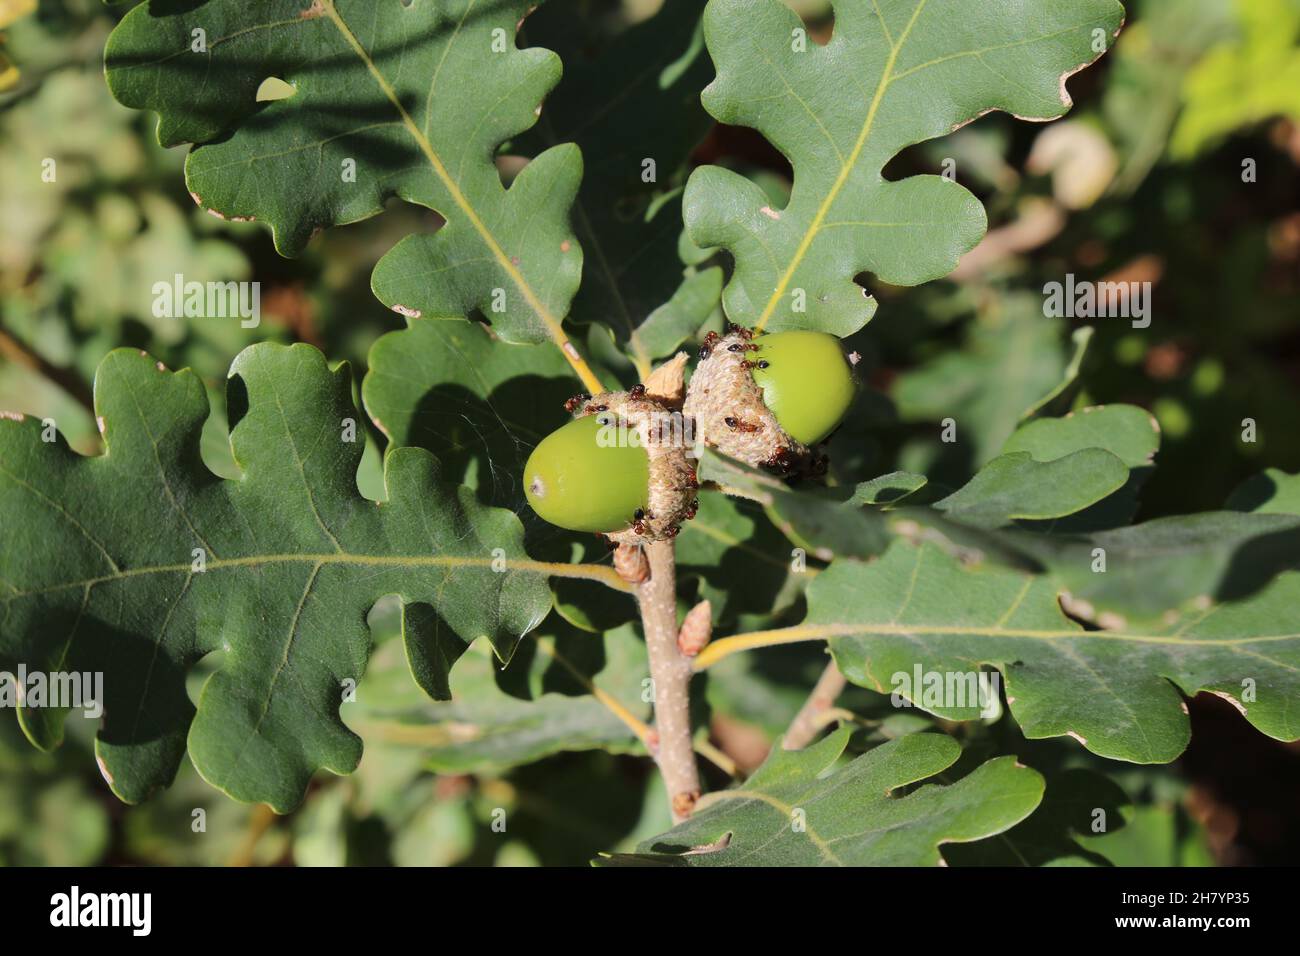 Quercus virgiliana, Quercus pubescens subsp. pubescens,  Fagaceae. Wild plant shot in summer. Stock Photo